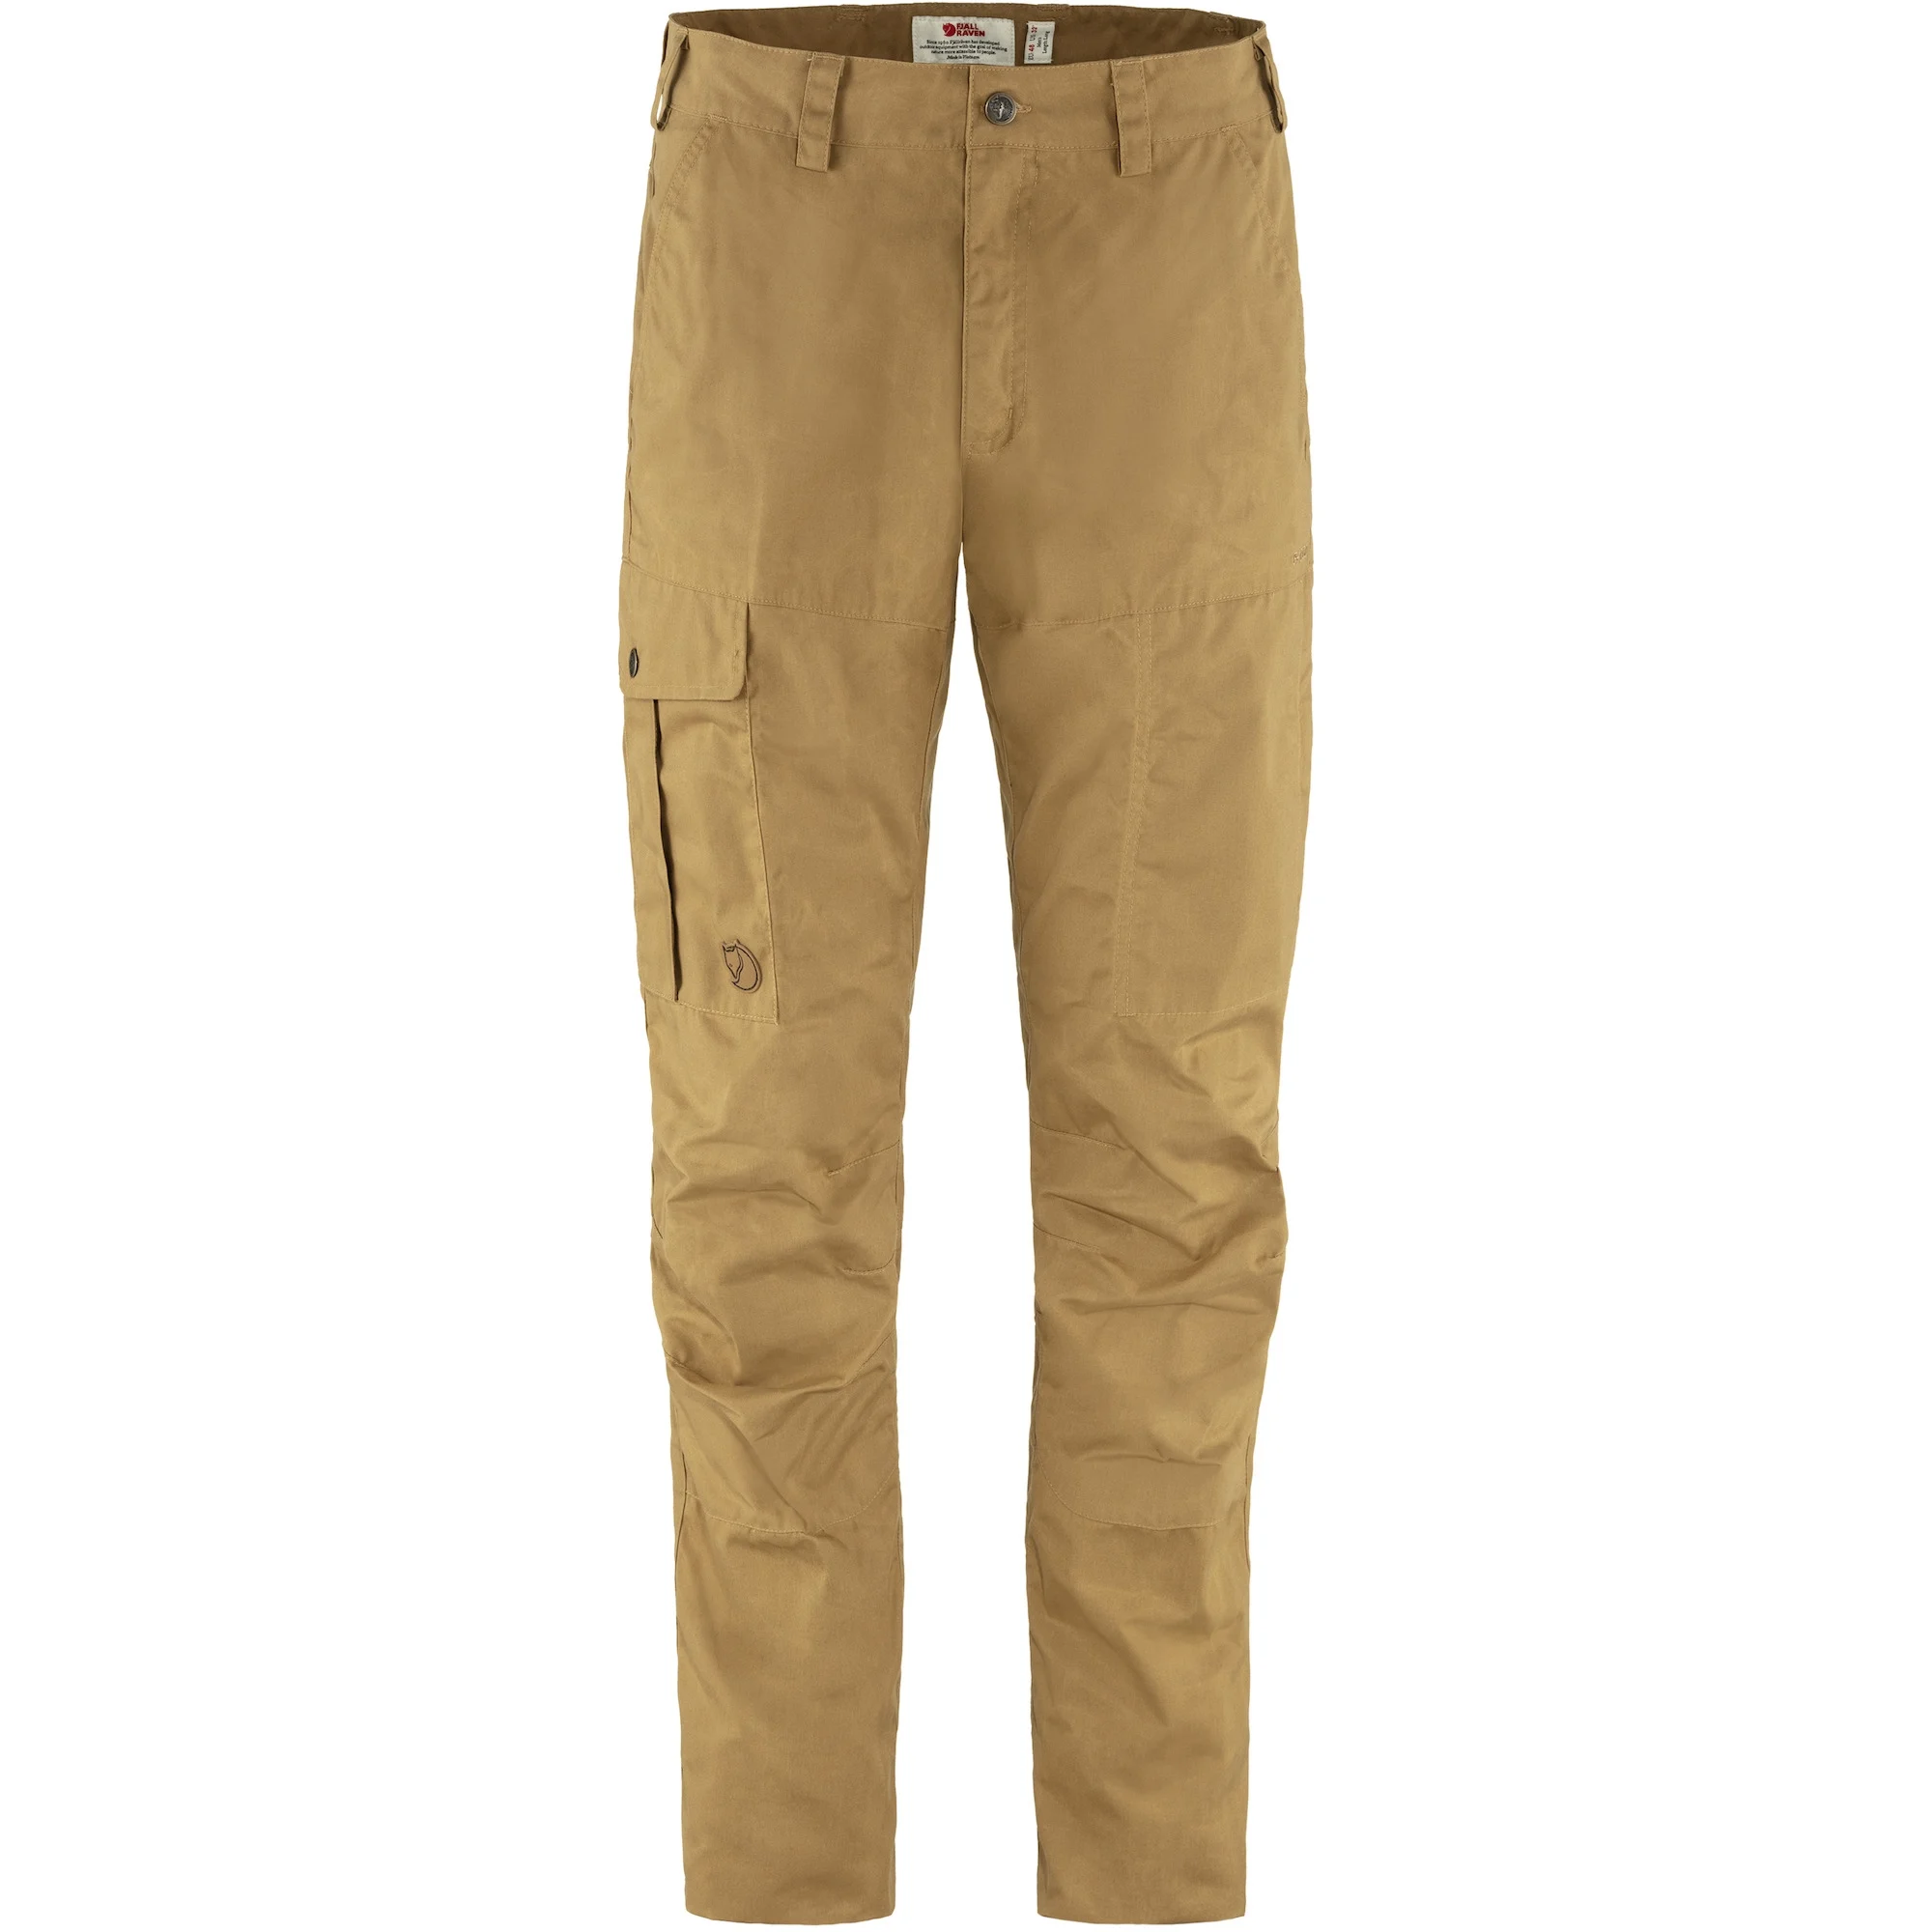 Karl Pro Trousers, buckwheat brown